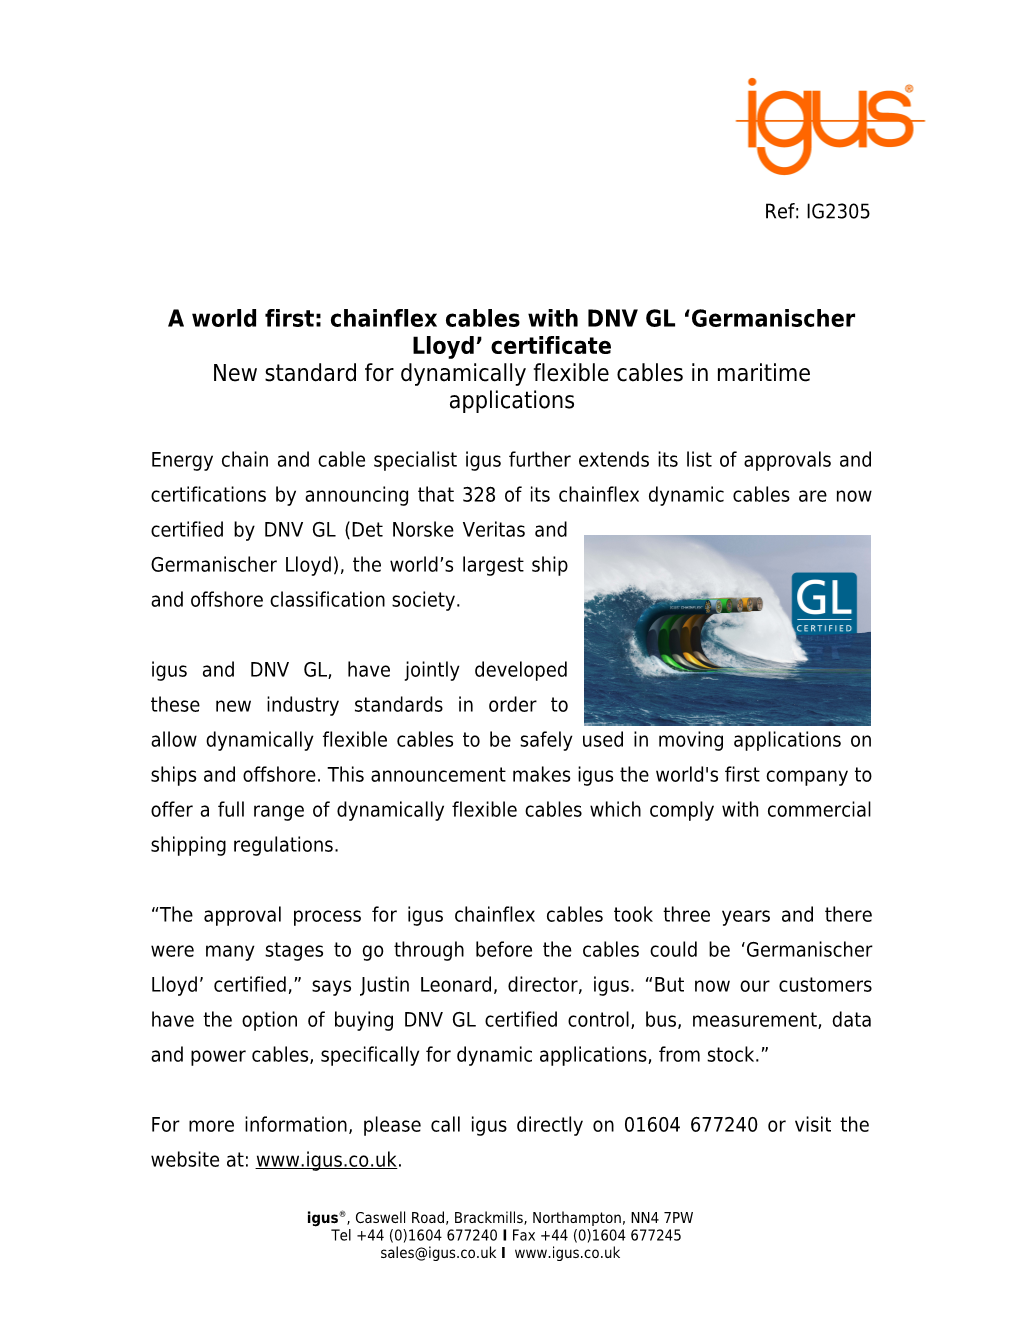 A World First: Chainflex Cables with DNV GL Germanischer Lloyd Certificate